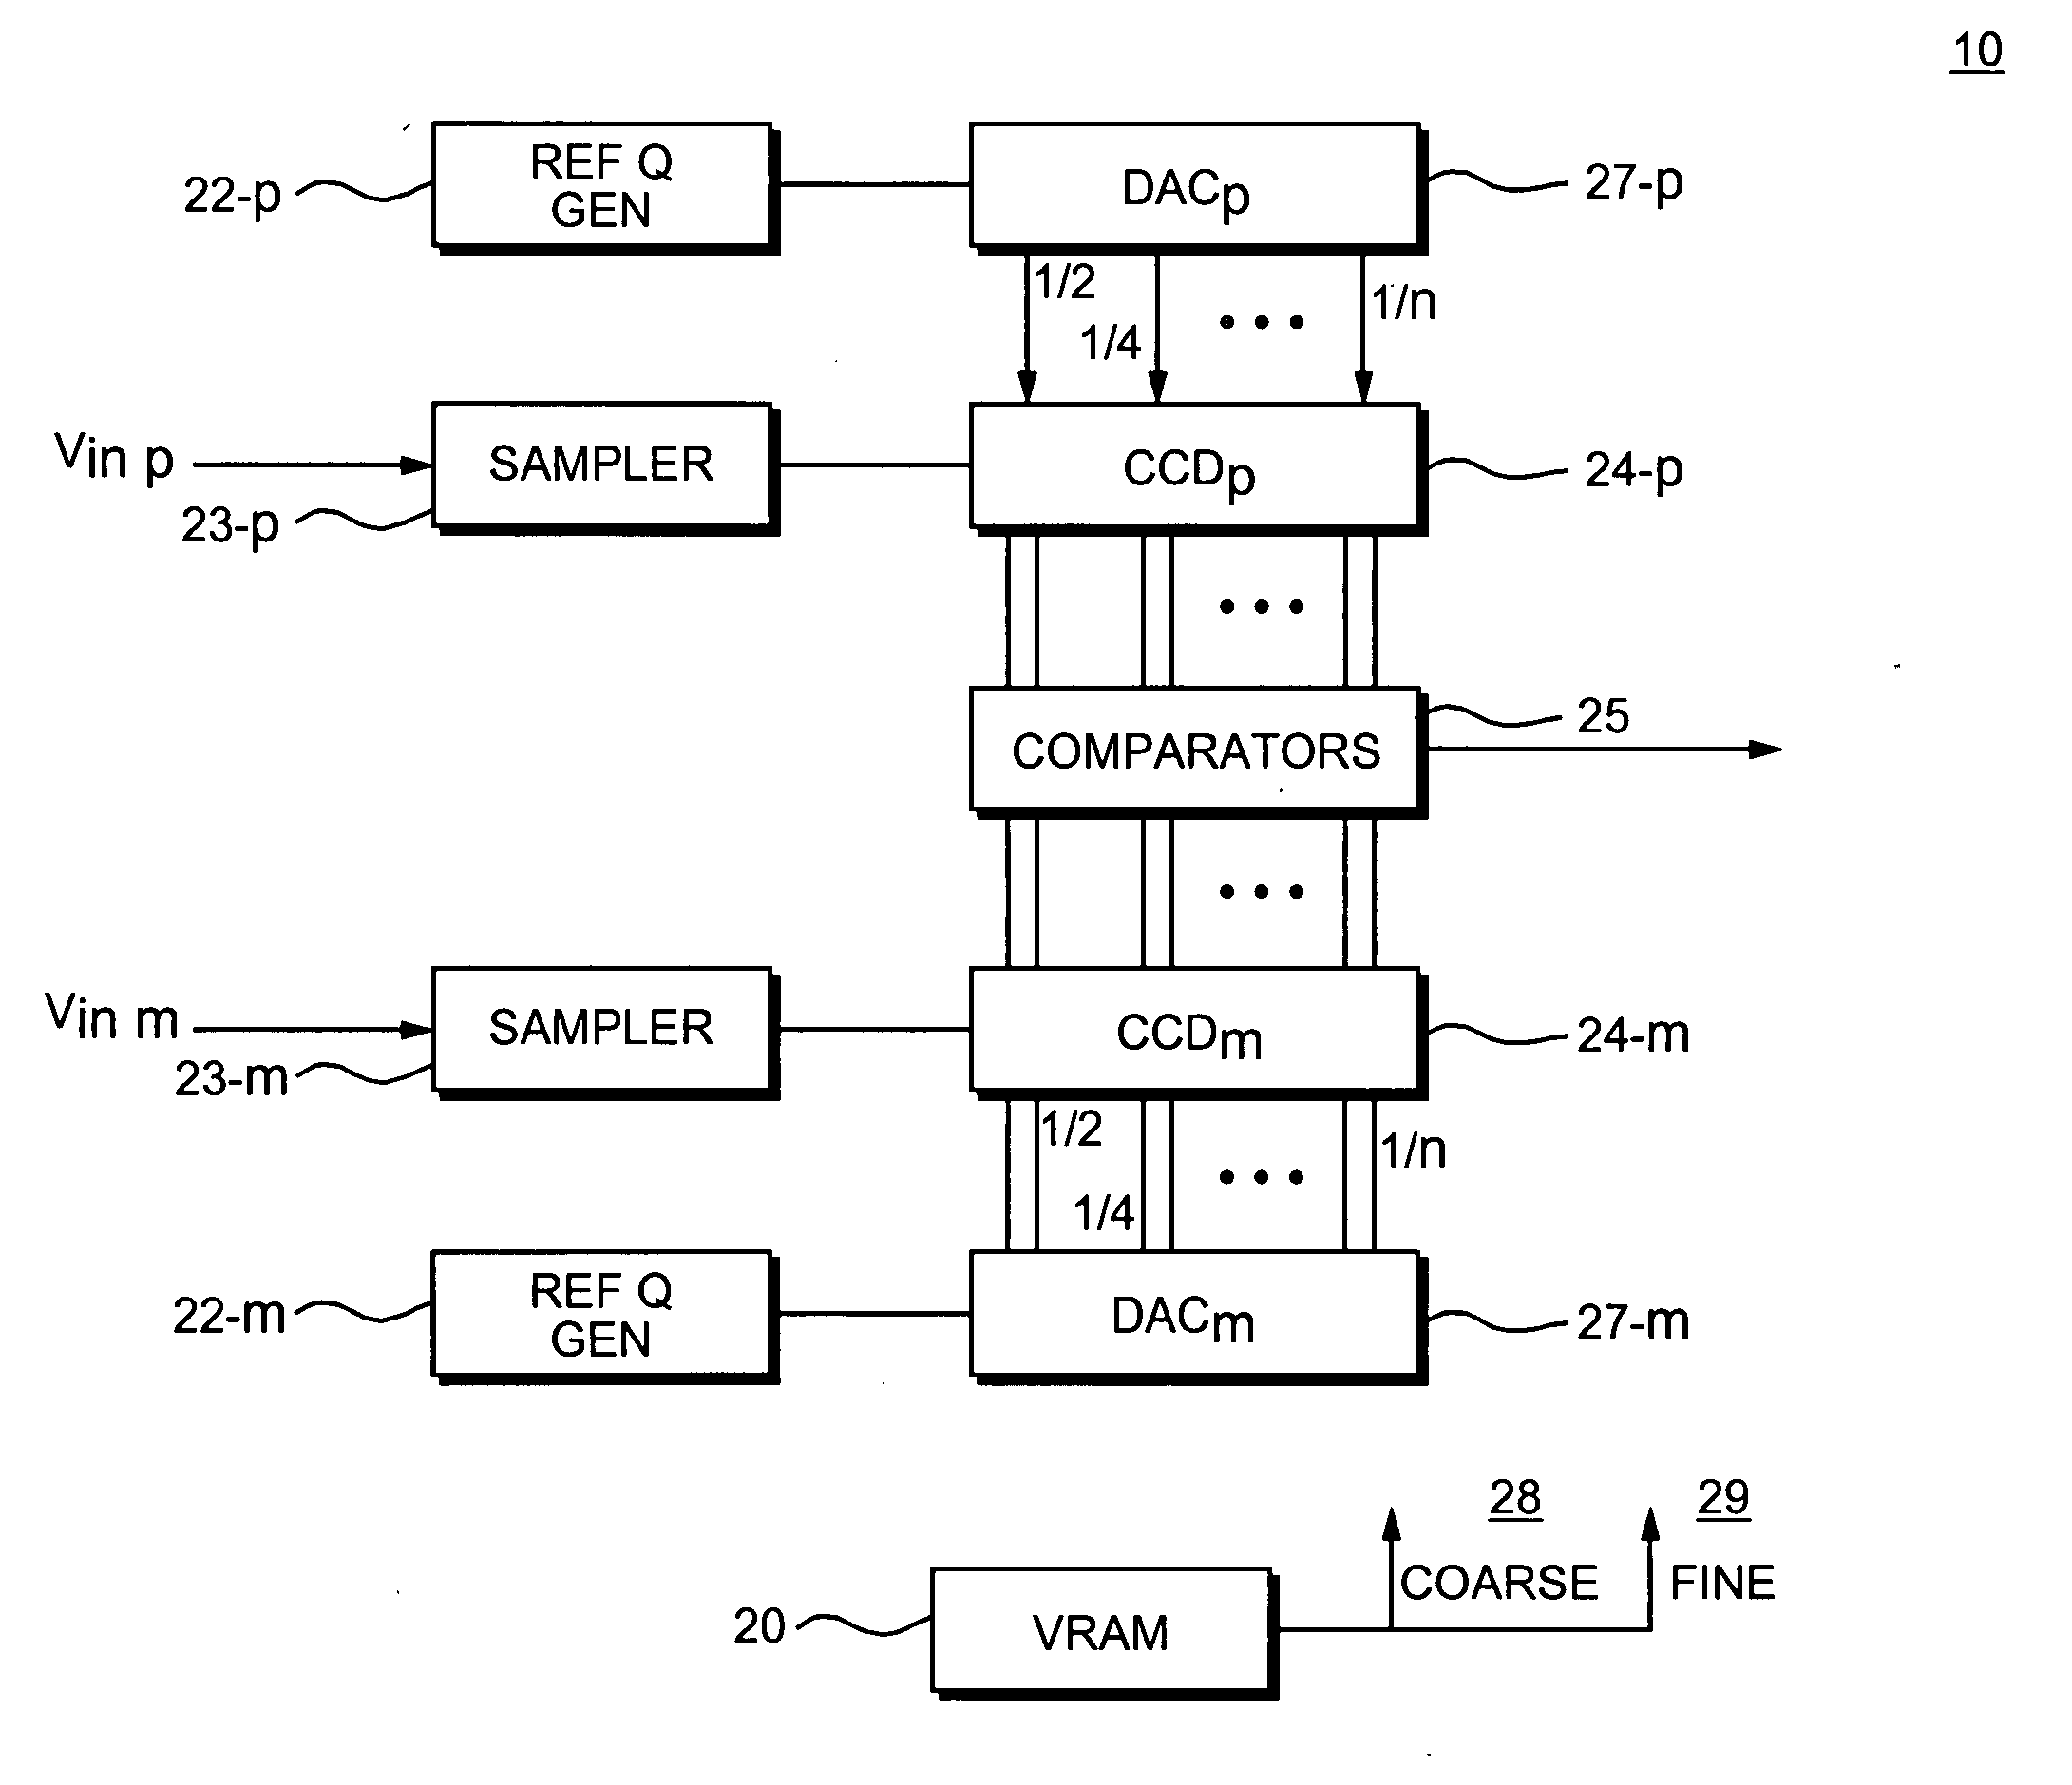 Voltage random access memory (VRAM)